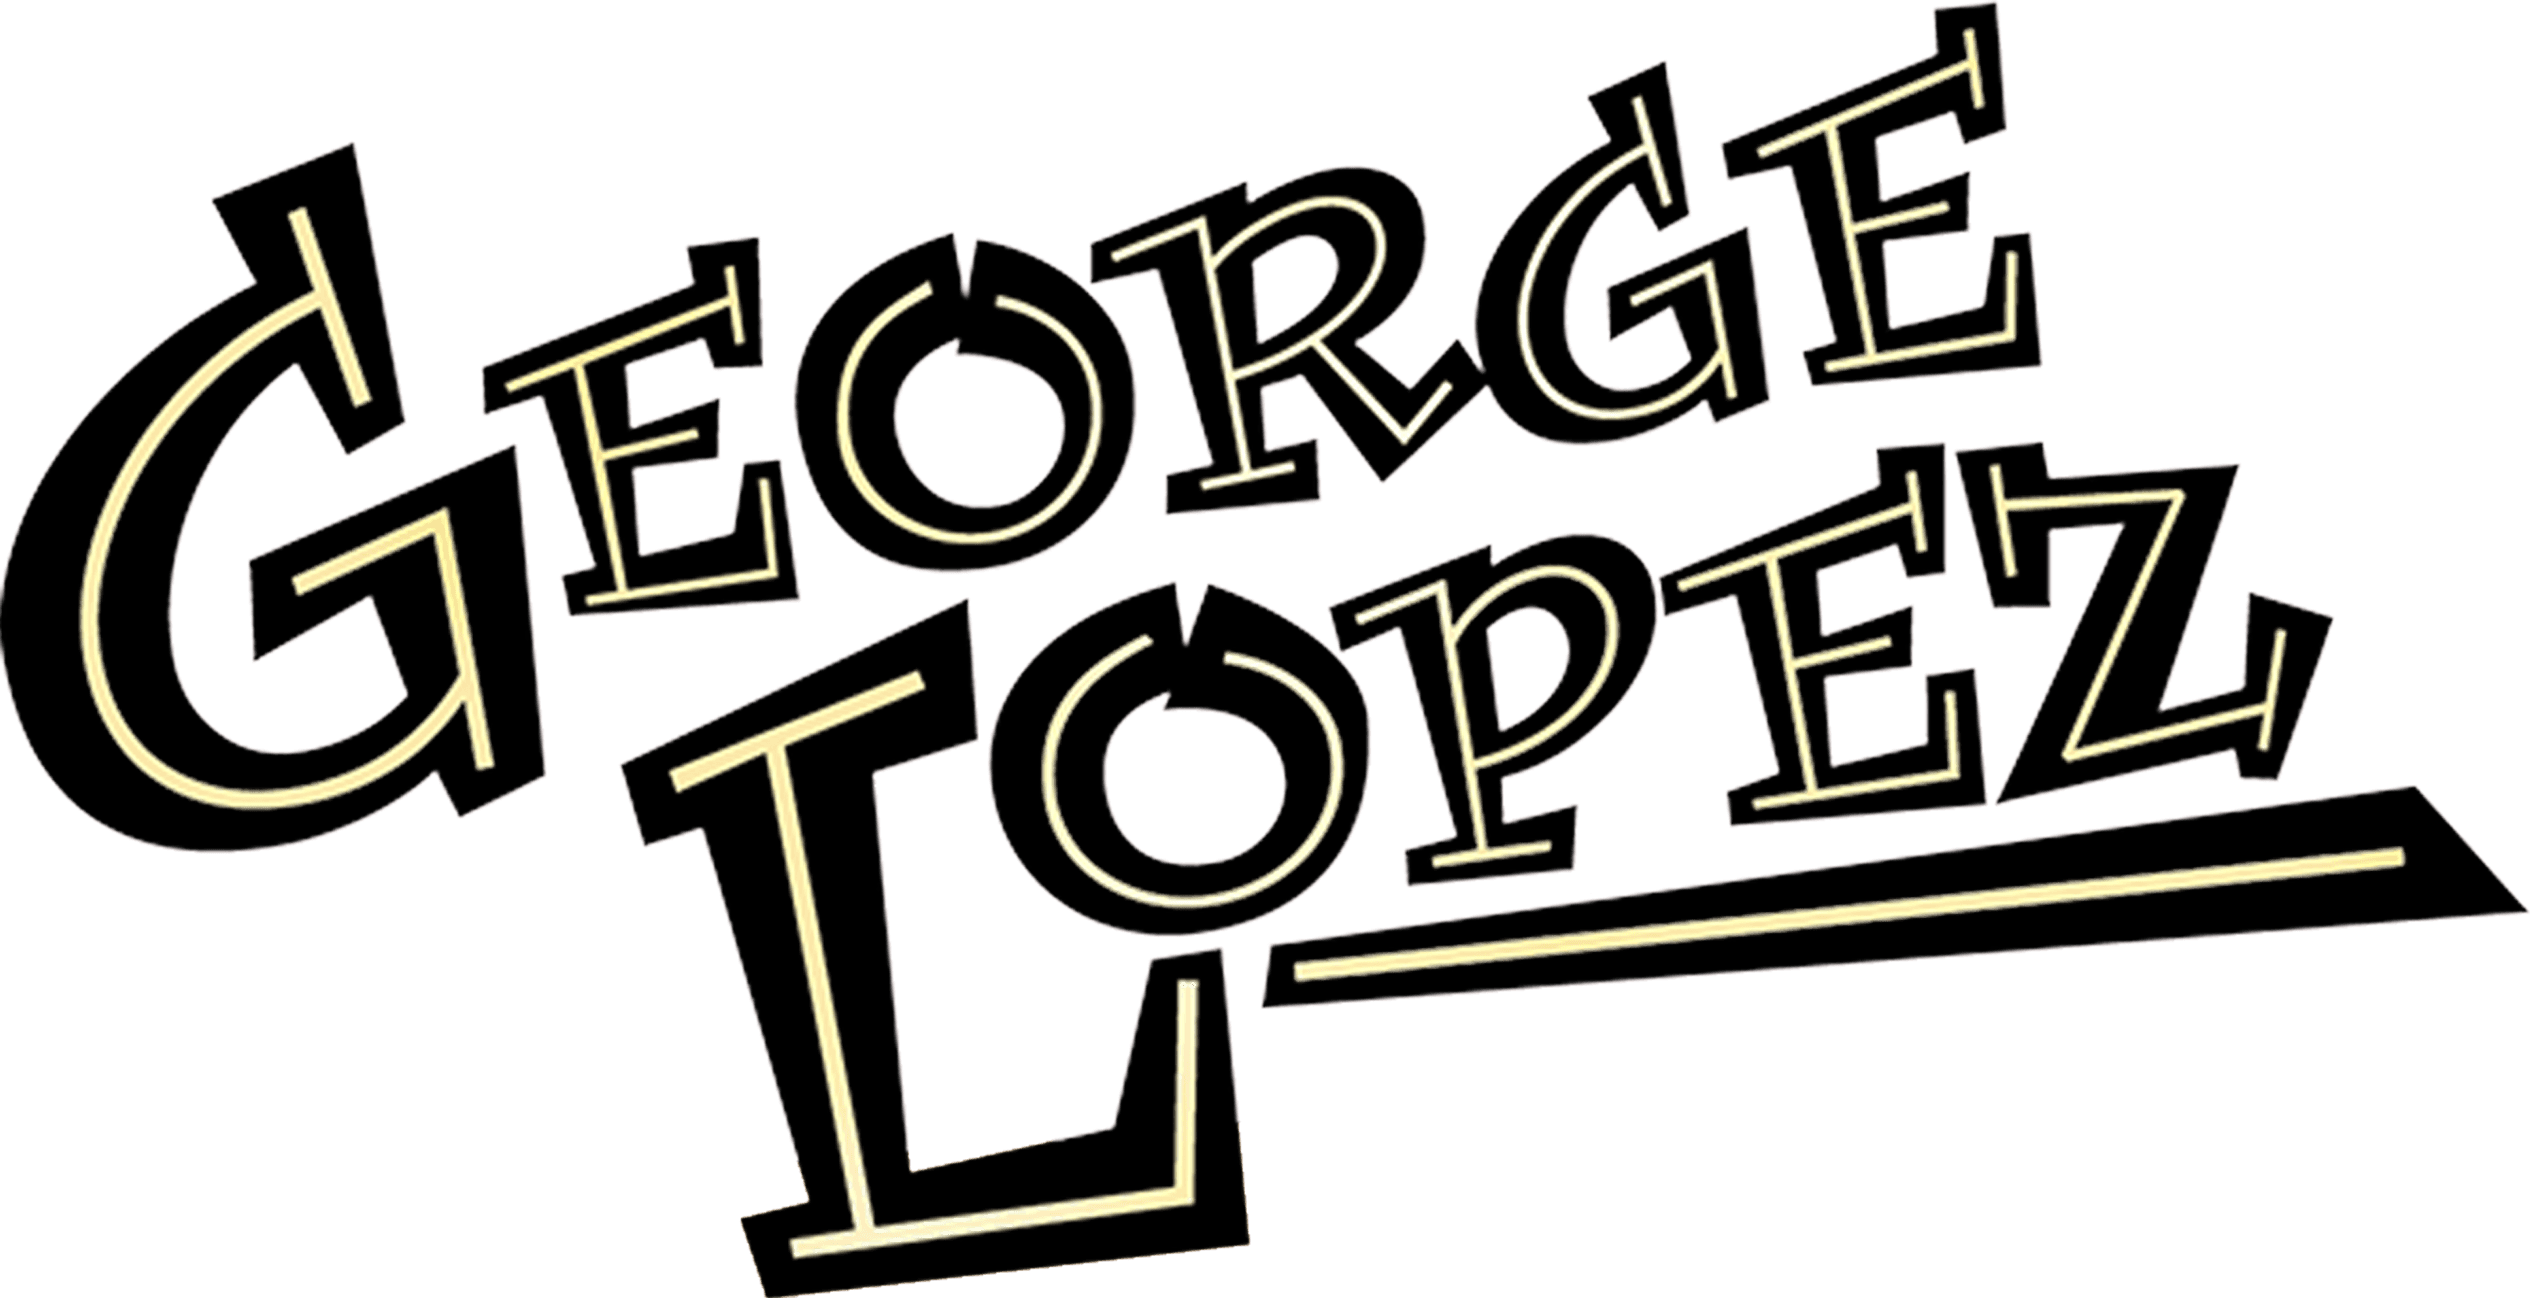 George Lopez logo